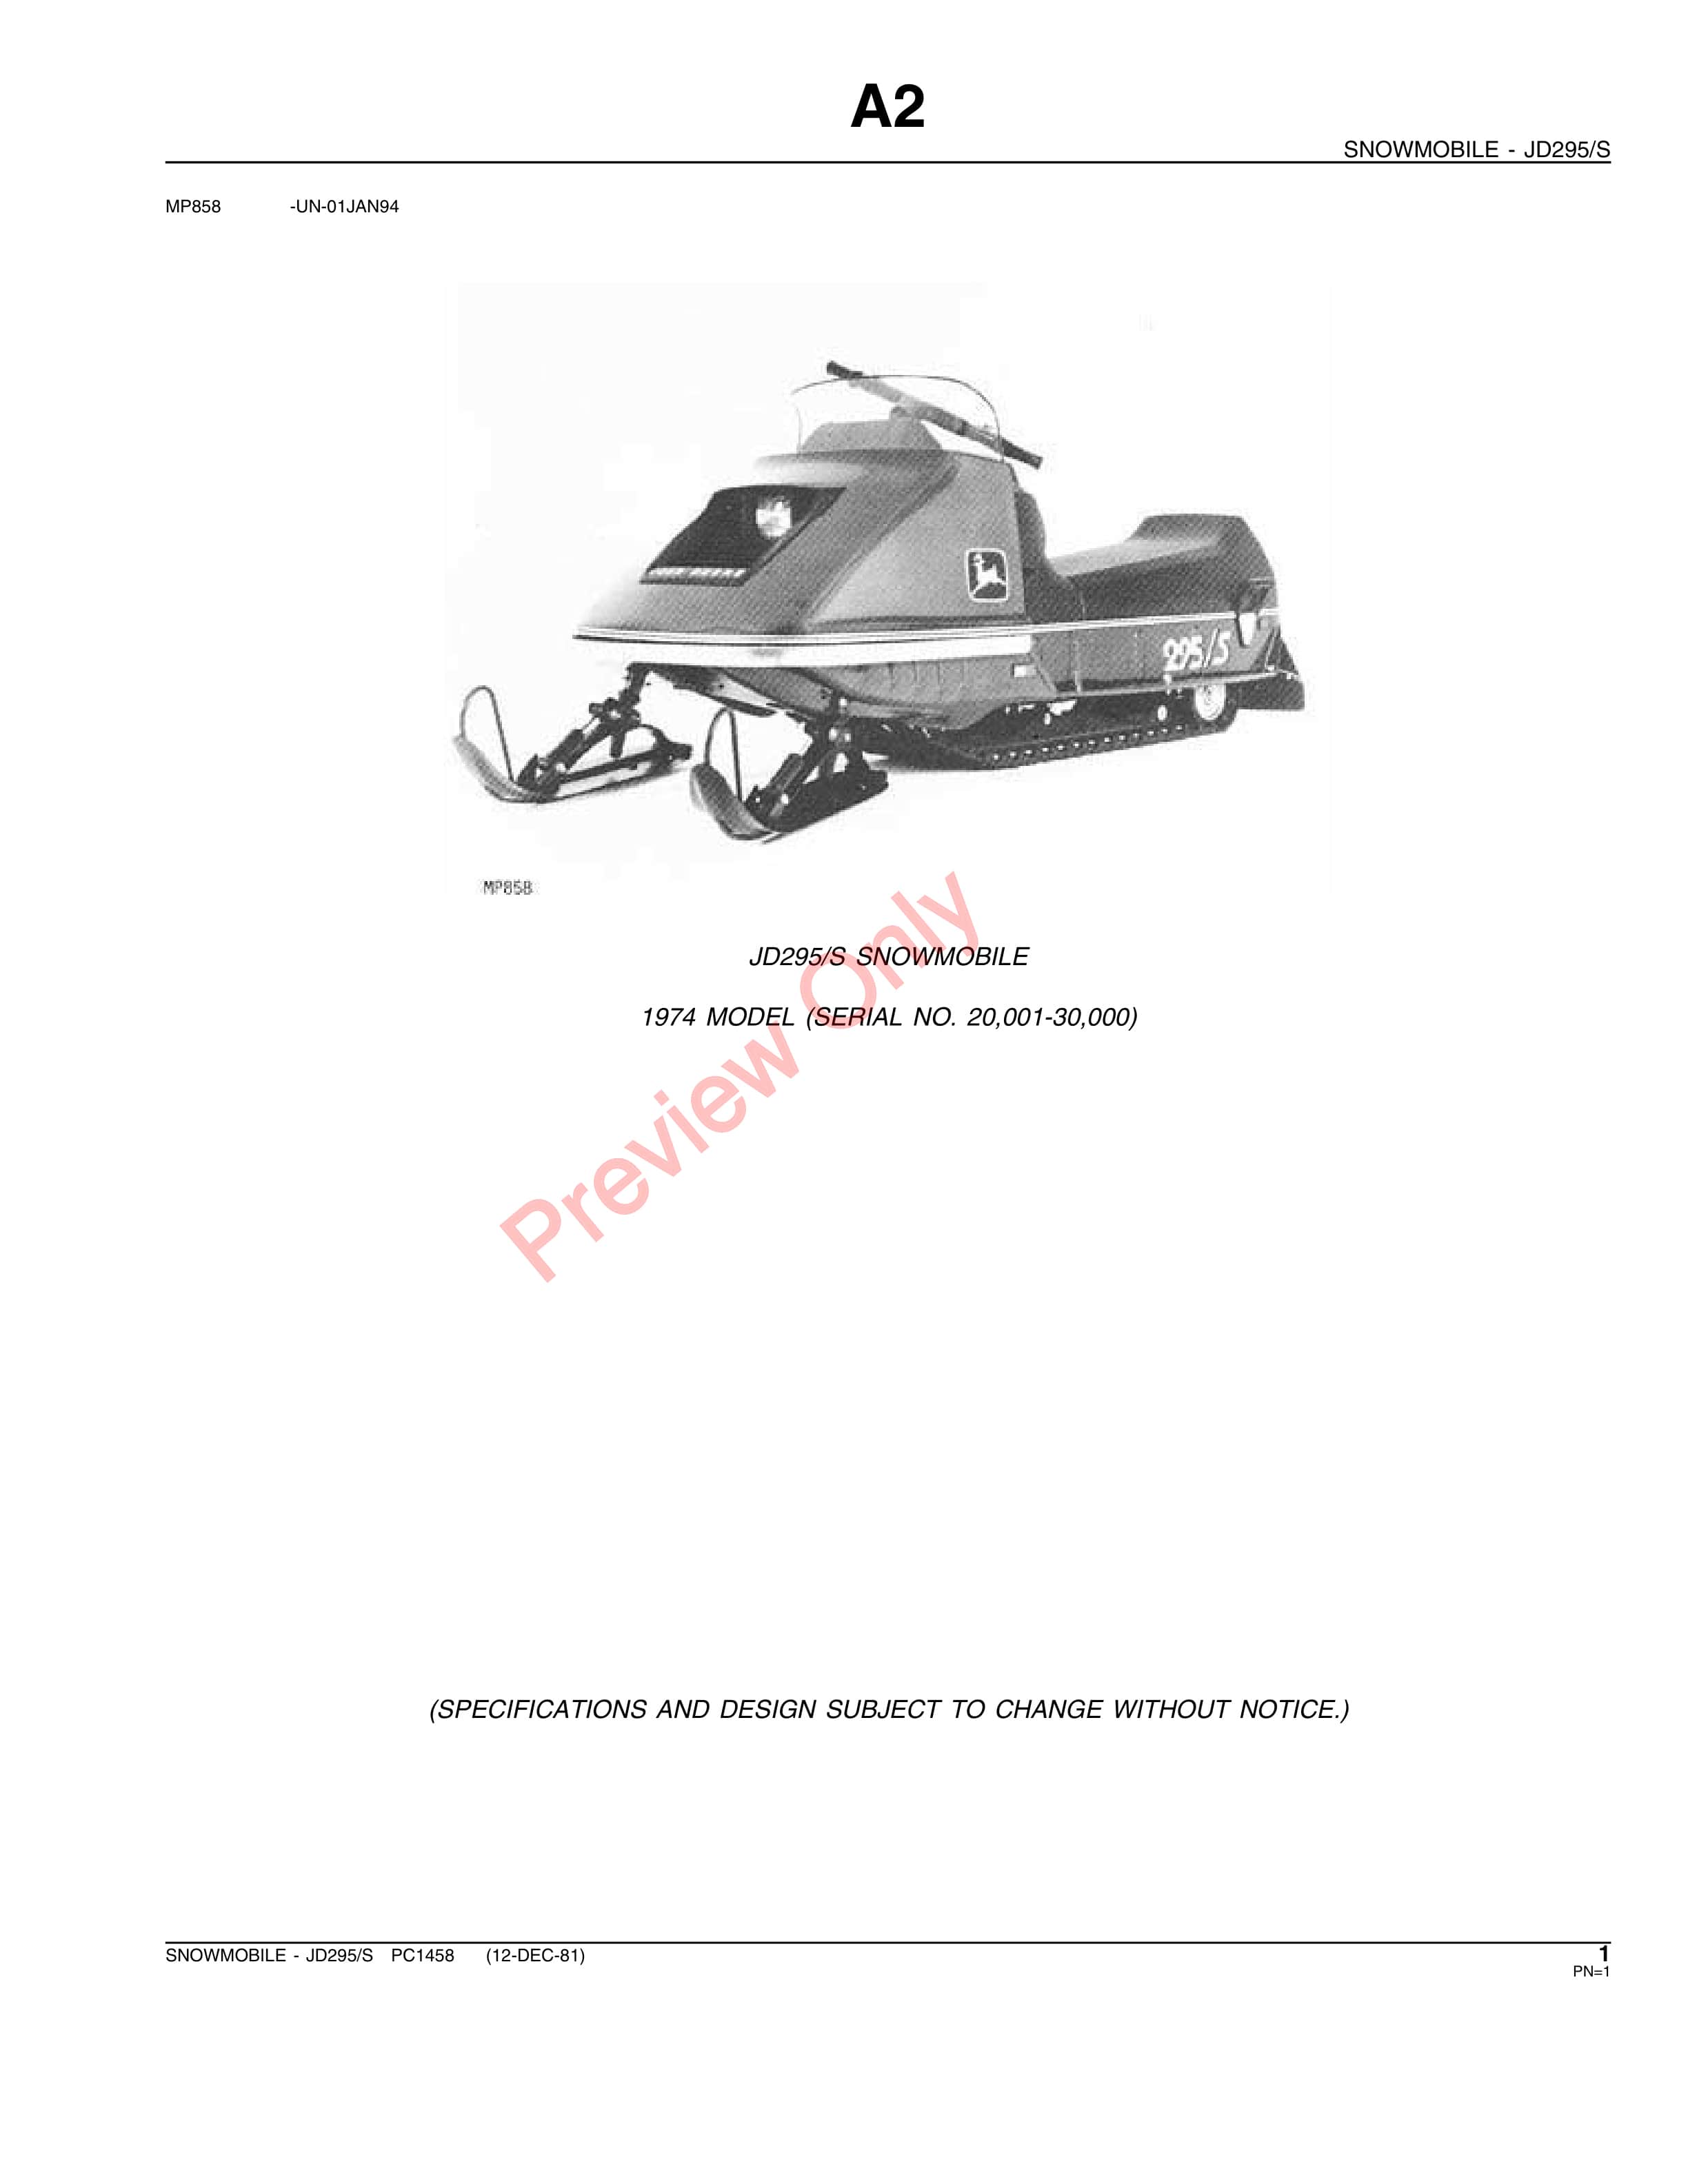 John Deere JD295S Snowmobiles Parts Catalog PC1458 12DEC81-4